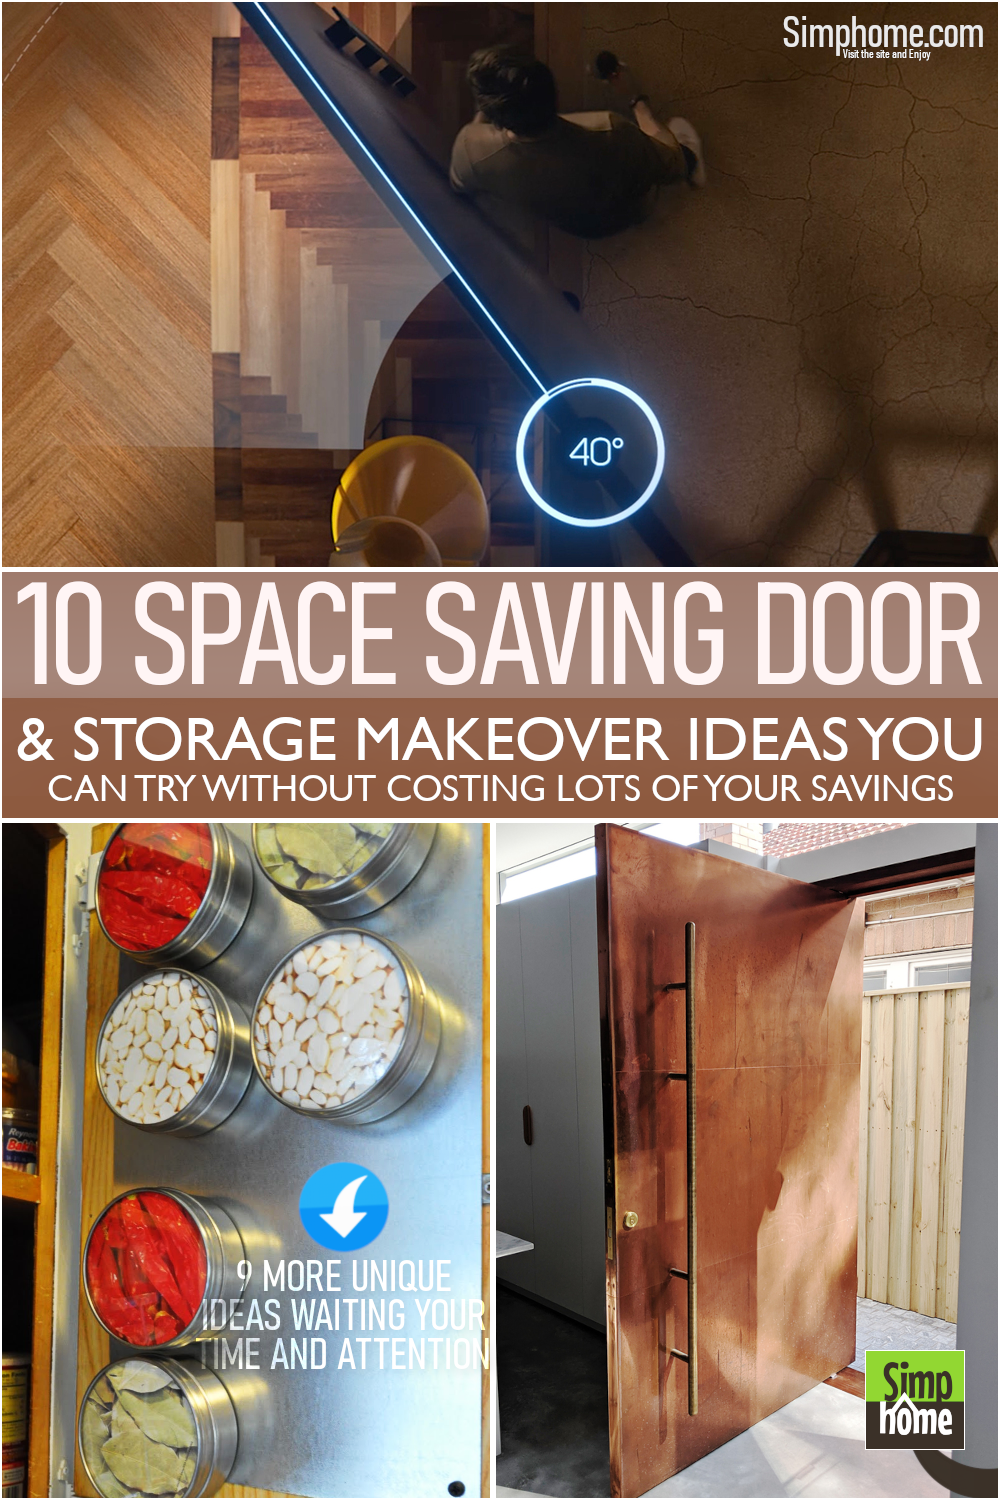 Take the 10 Space saving door ideas via Simphome